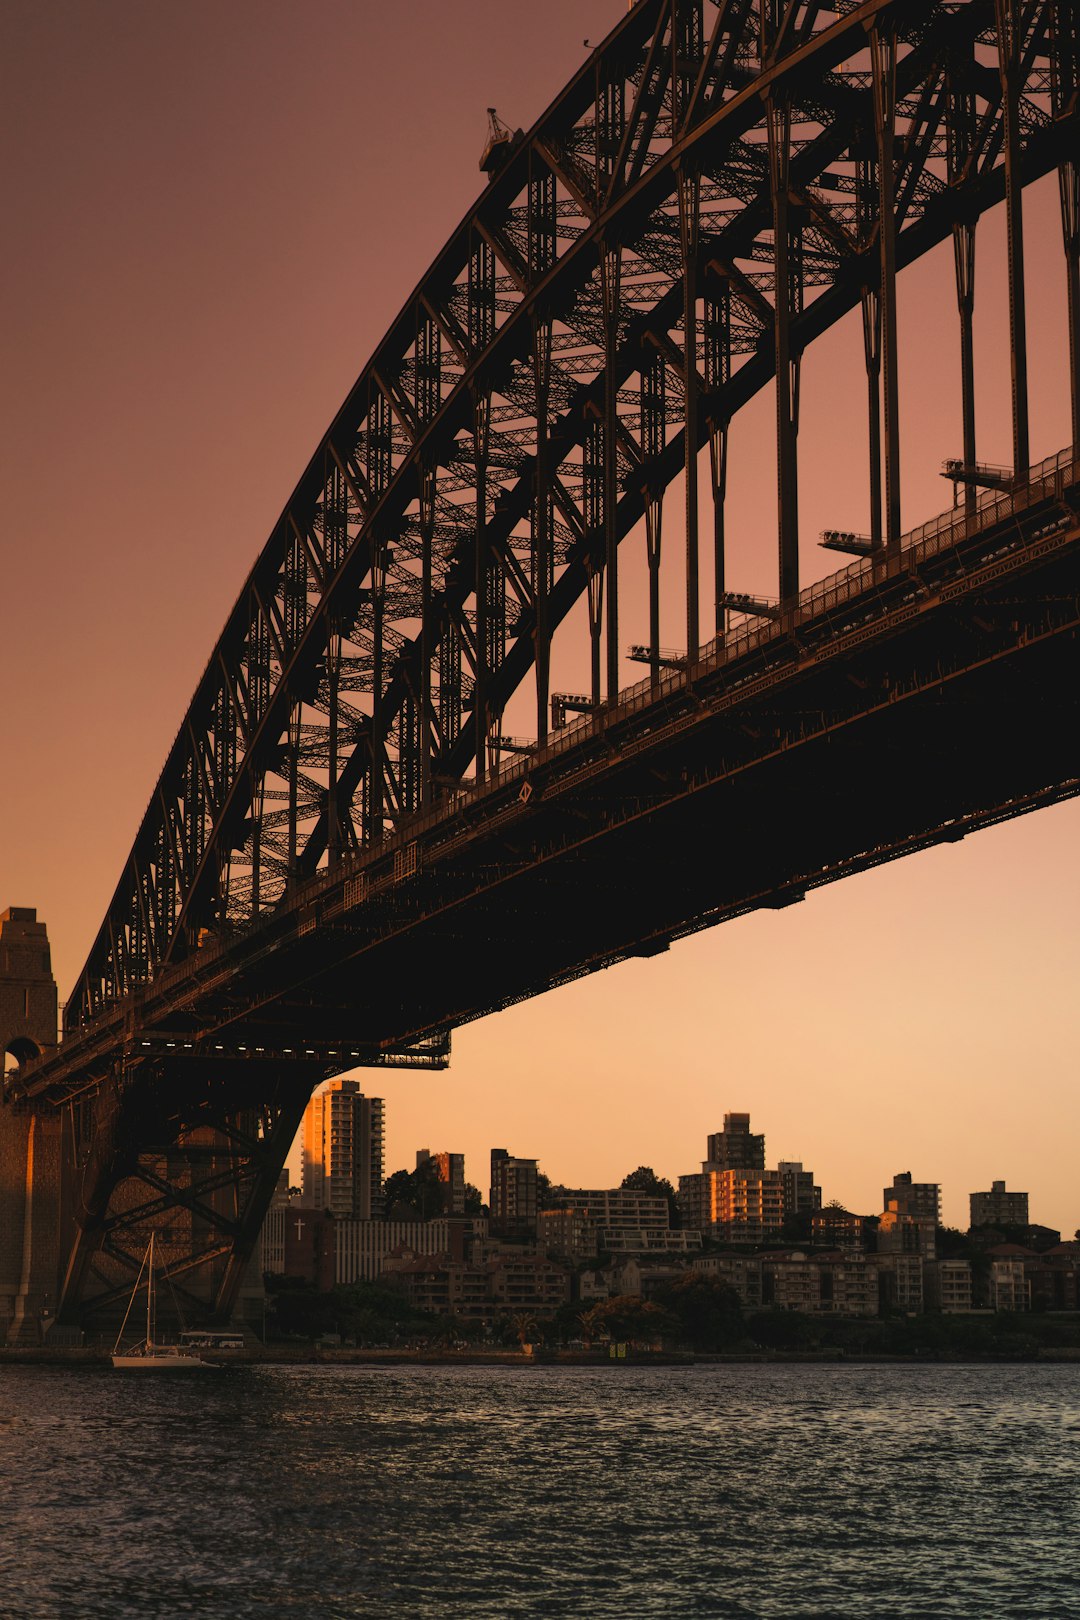 Travel Tips and Stories of Sydney Harbour Bridge in Australia